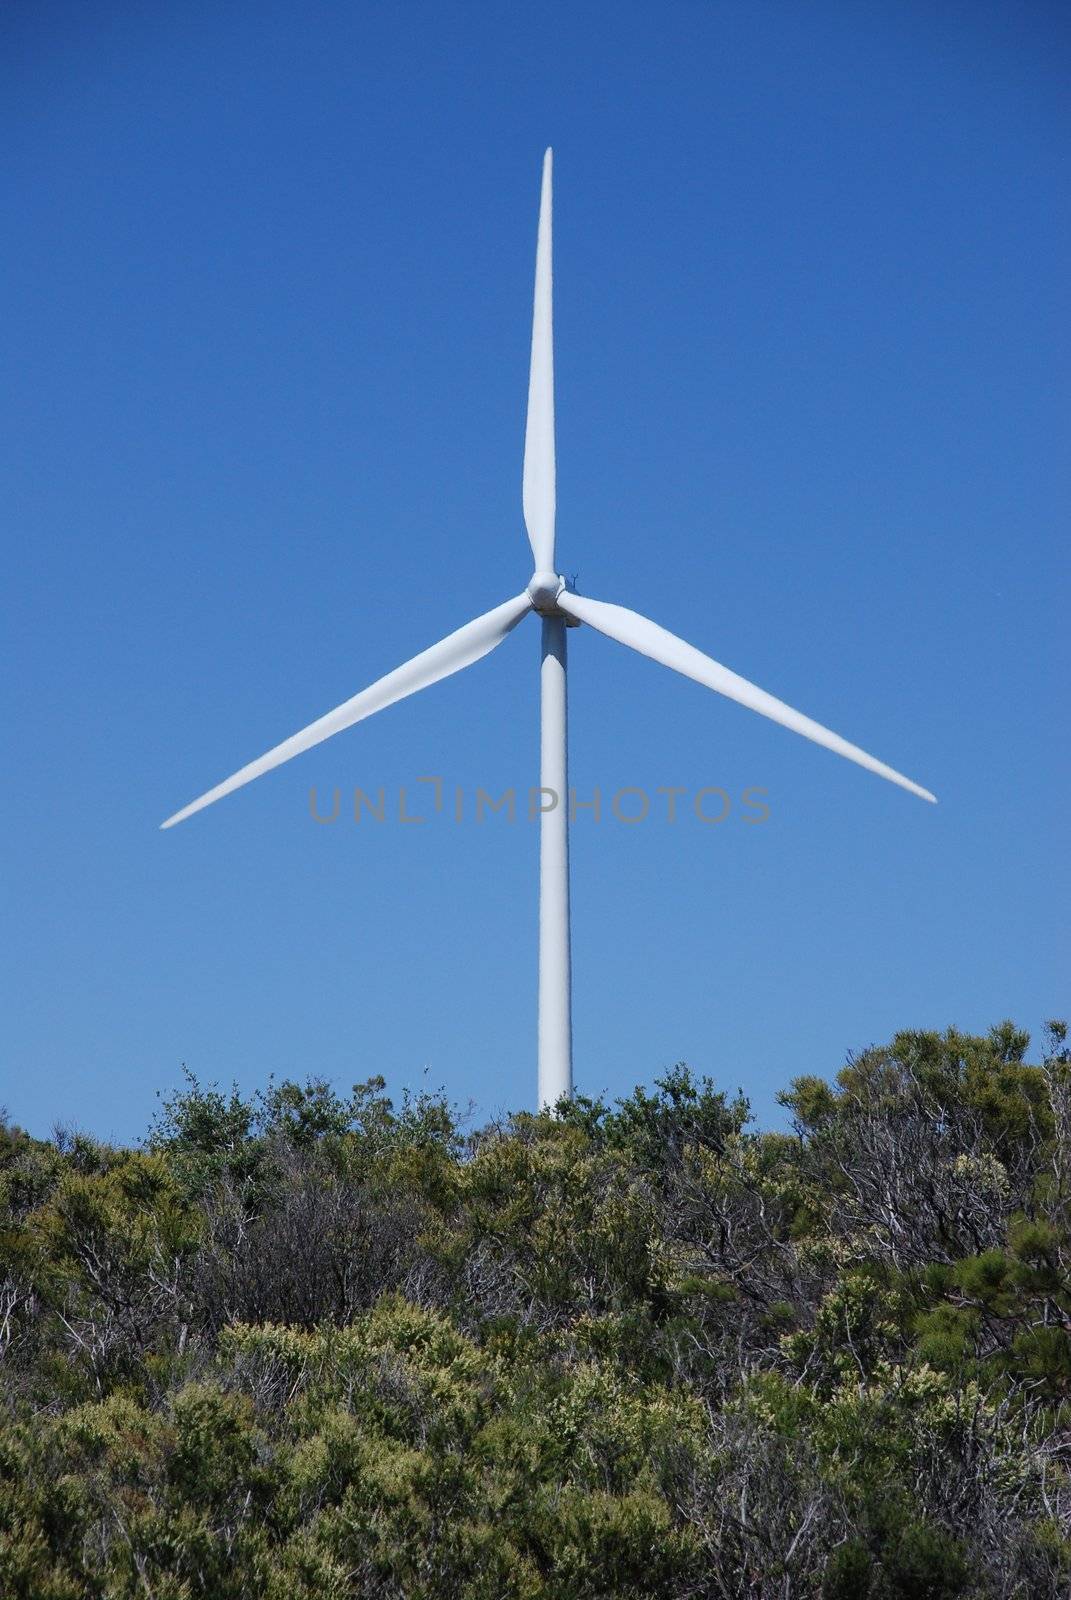 Wind Powered Electrical Generating Station near Palm Desert California